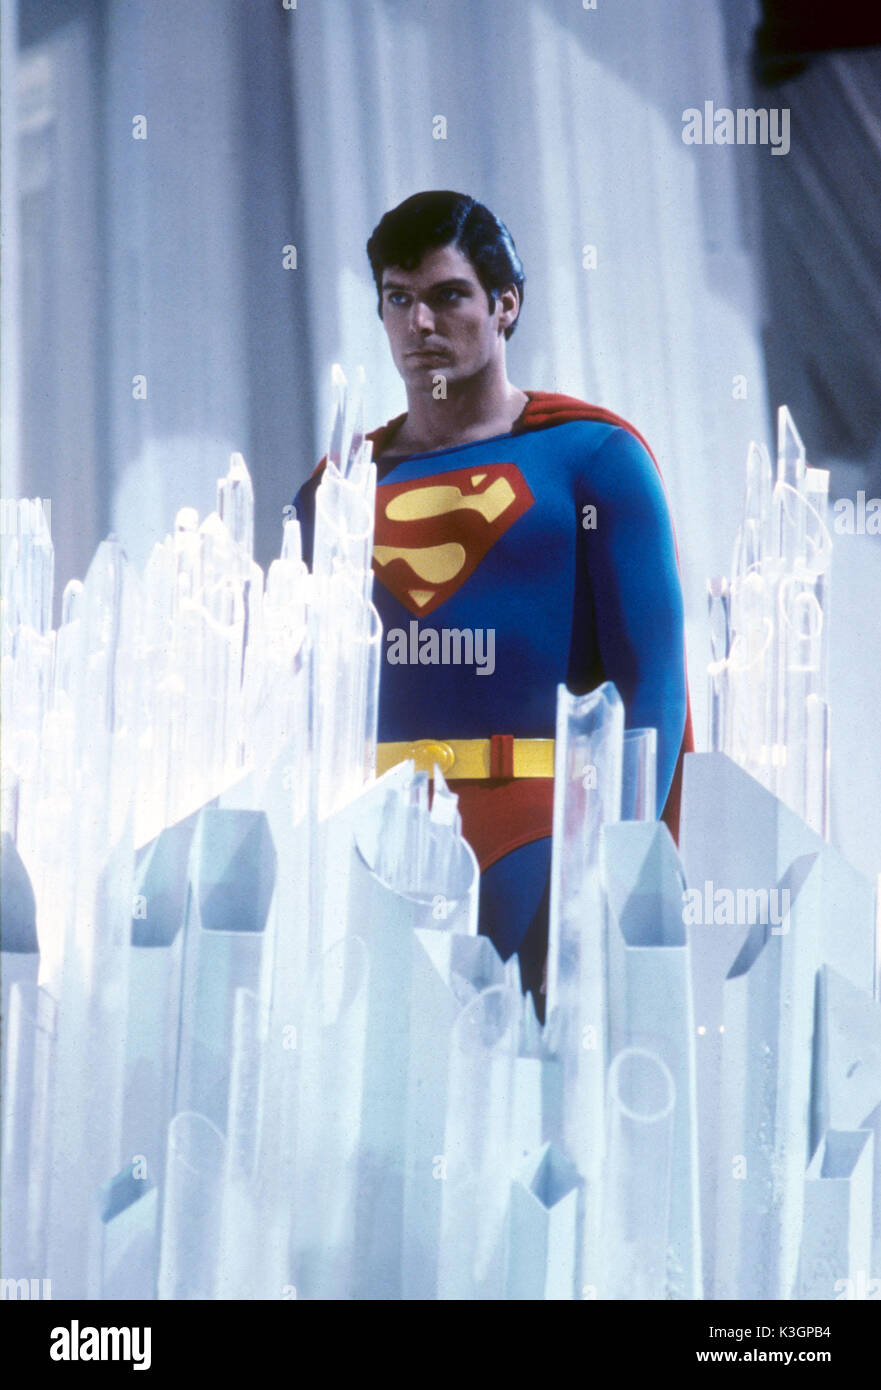 Christopher Reeve Superman  Superman, Christopher reeve superman, Superman  movies